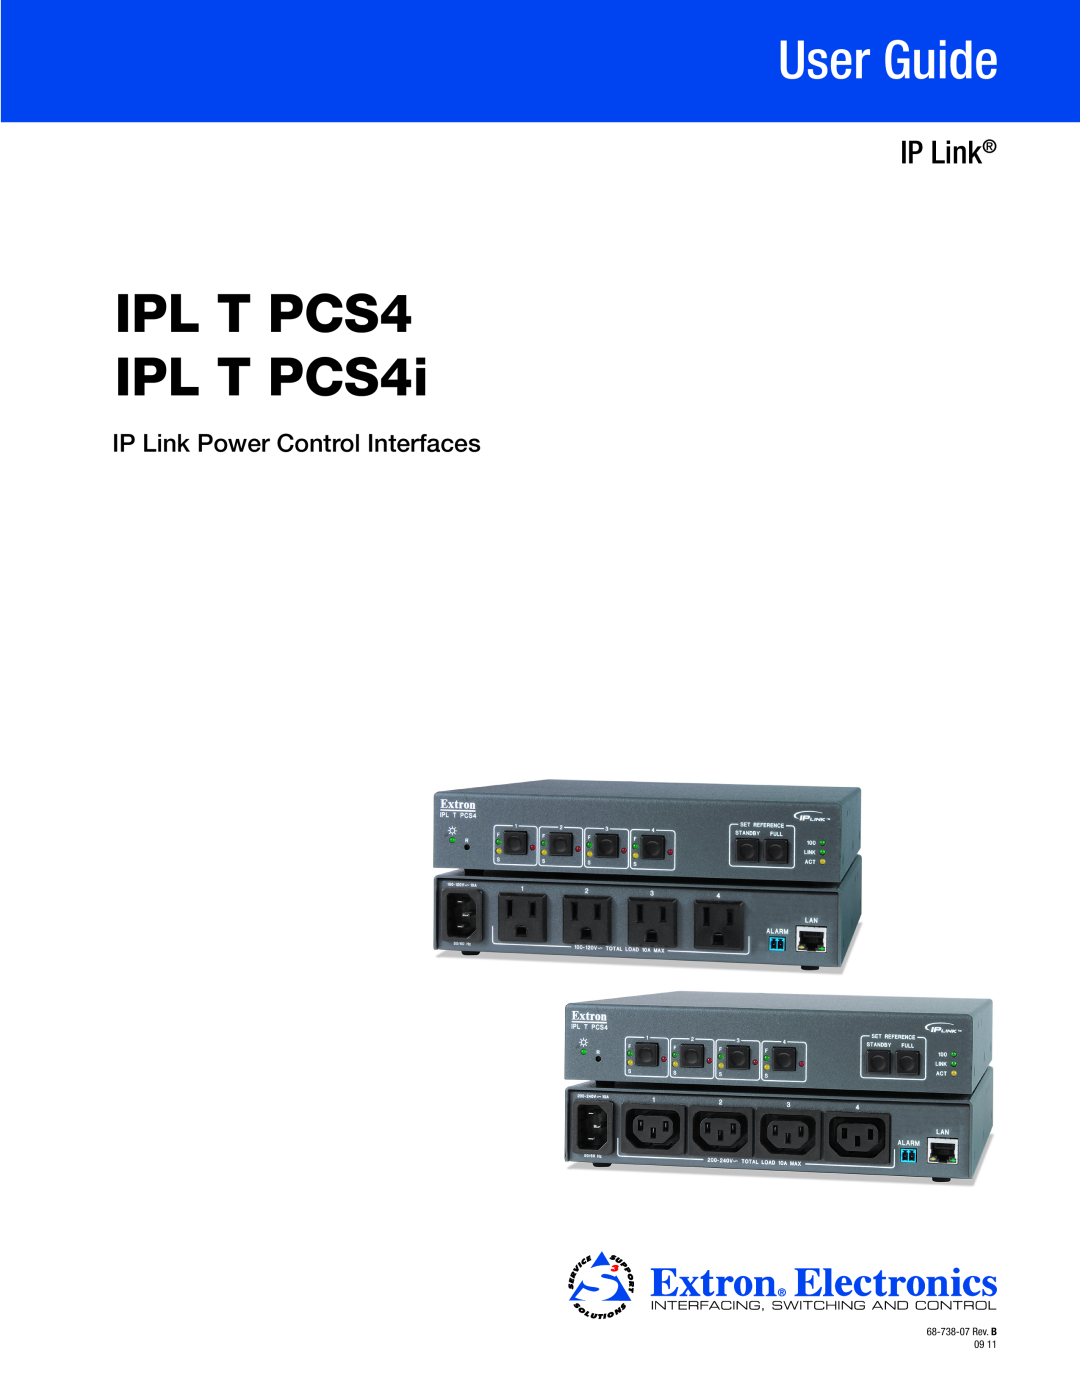 Extron electronic manual IPL T PCS4 IPL T PCS4i, User Guide, IP Link Power Control Interfaces, 68-738-07 Rev. B 